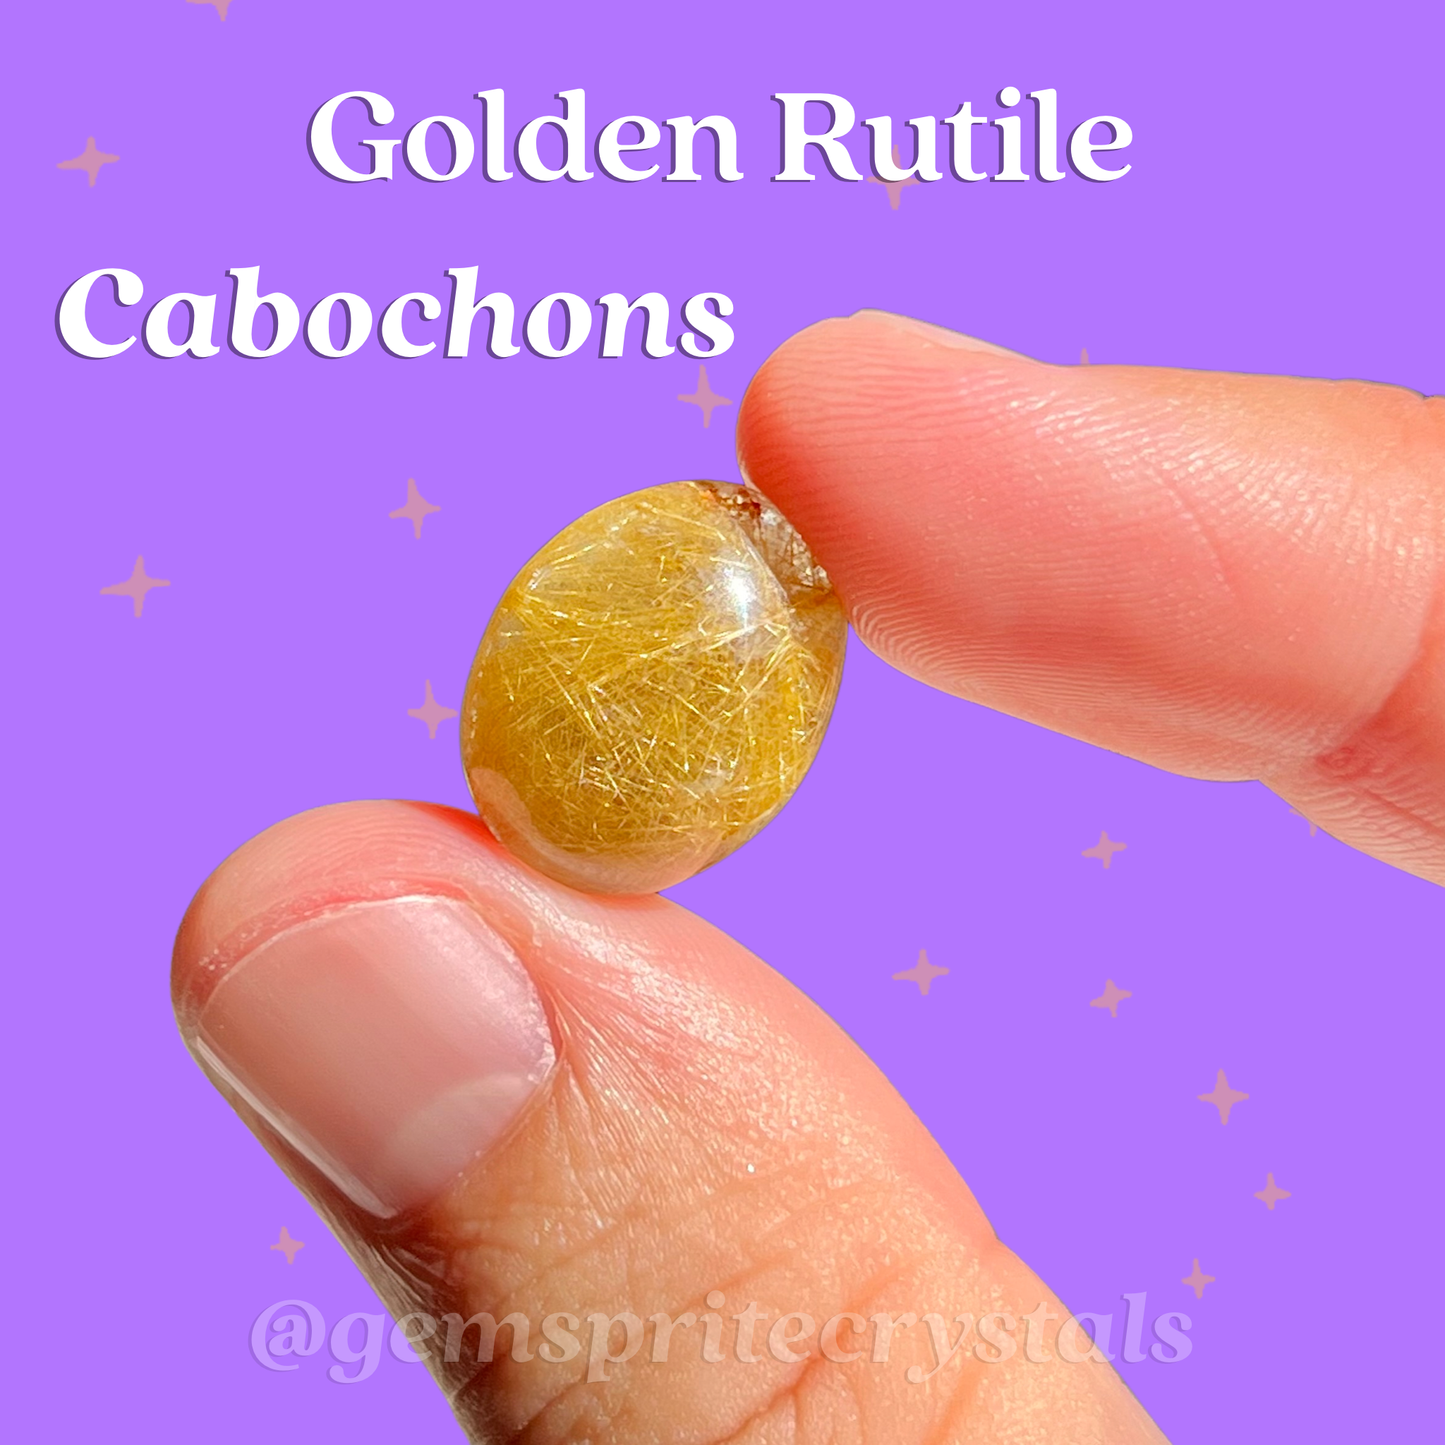 Golden Rutile Cabochons